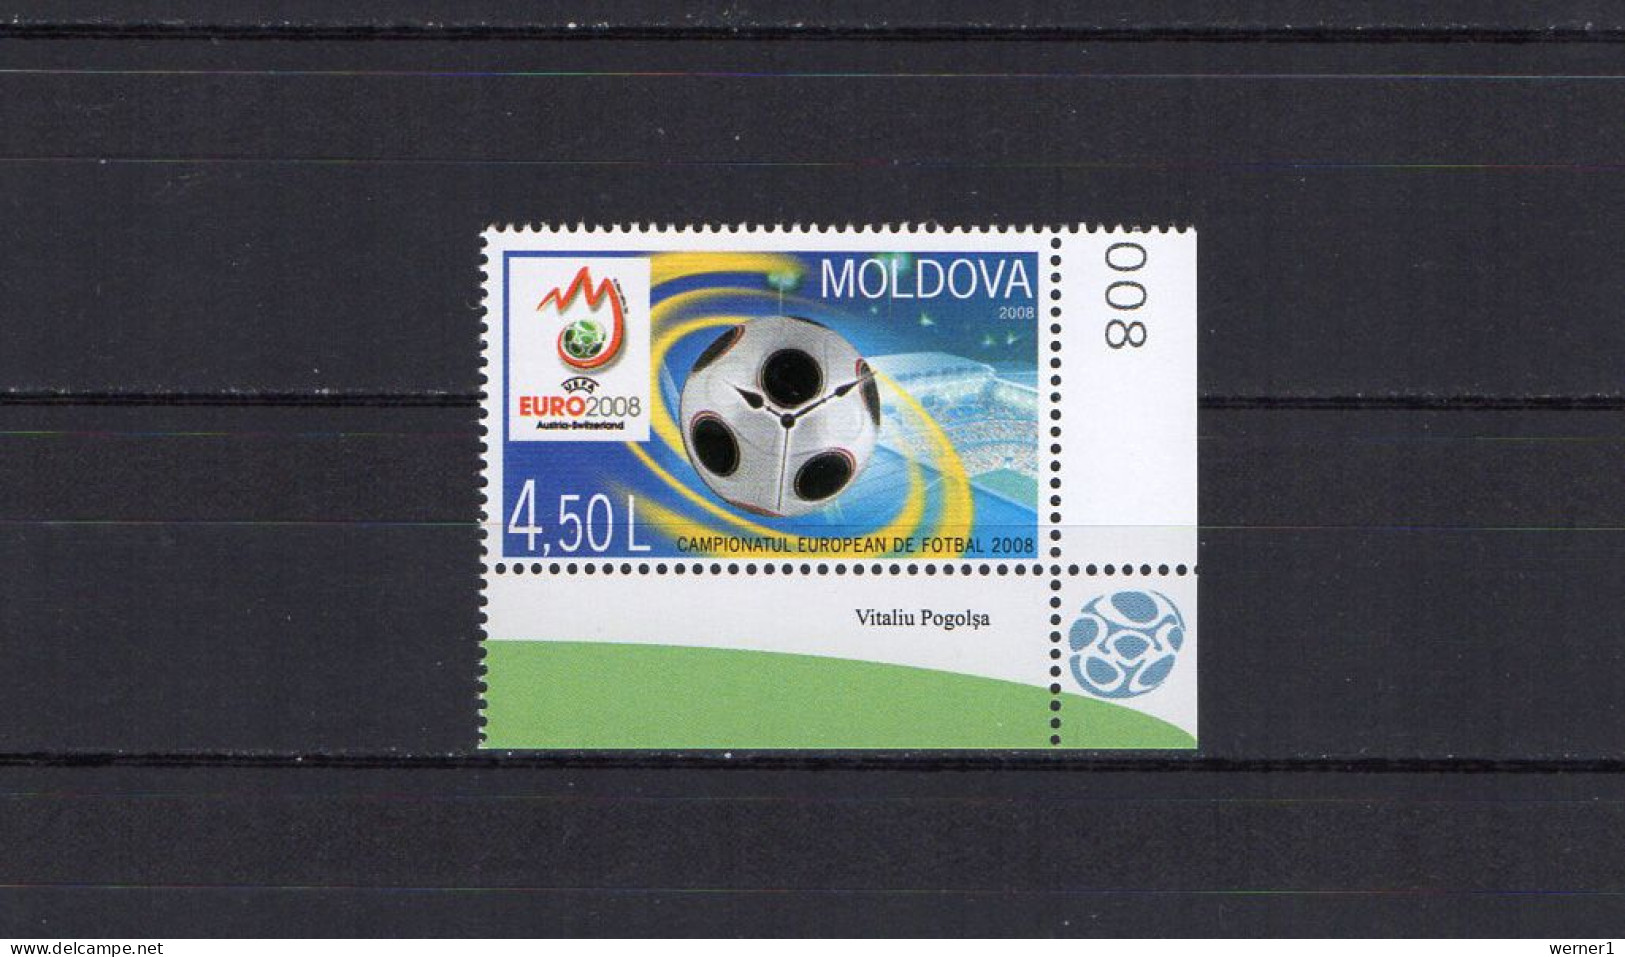 Moldova 2008 Football Soccer European Championship Stamp MNH - UEFA European Championship